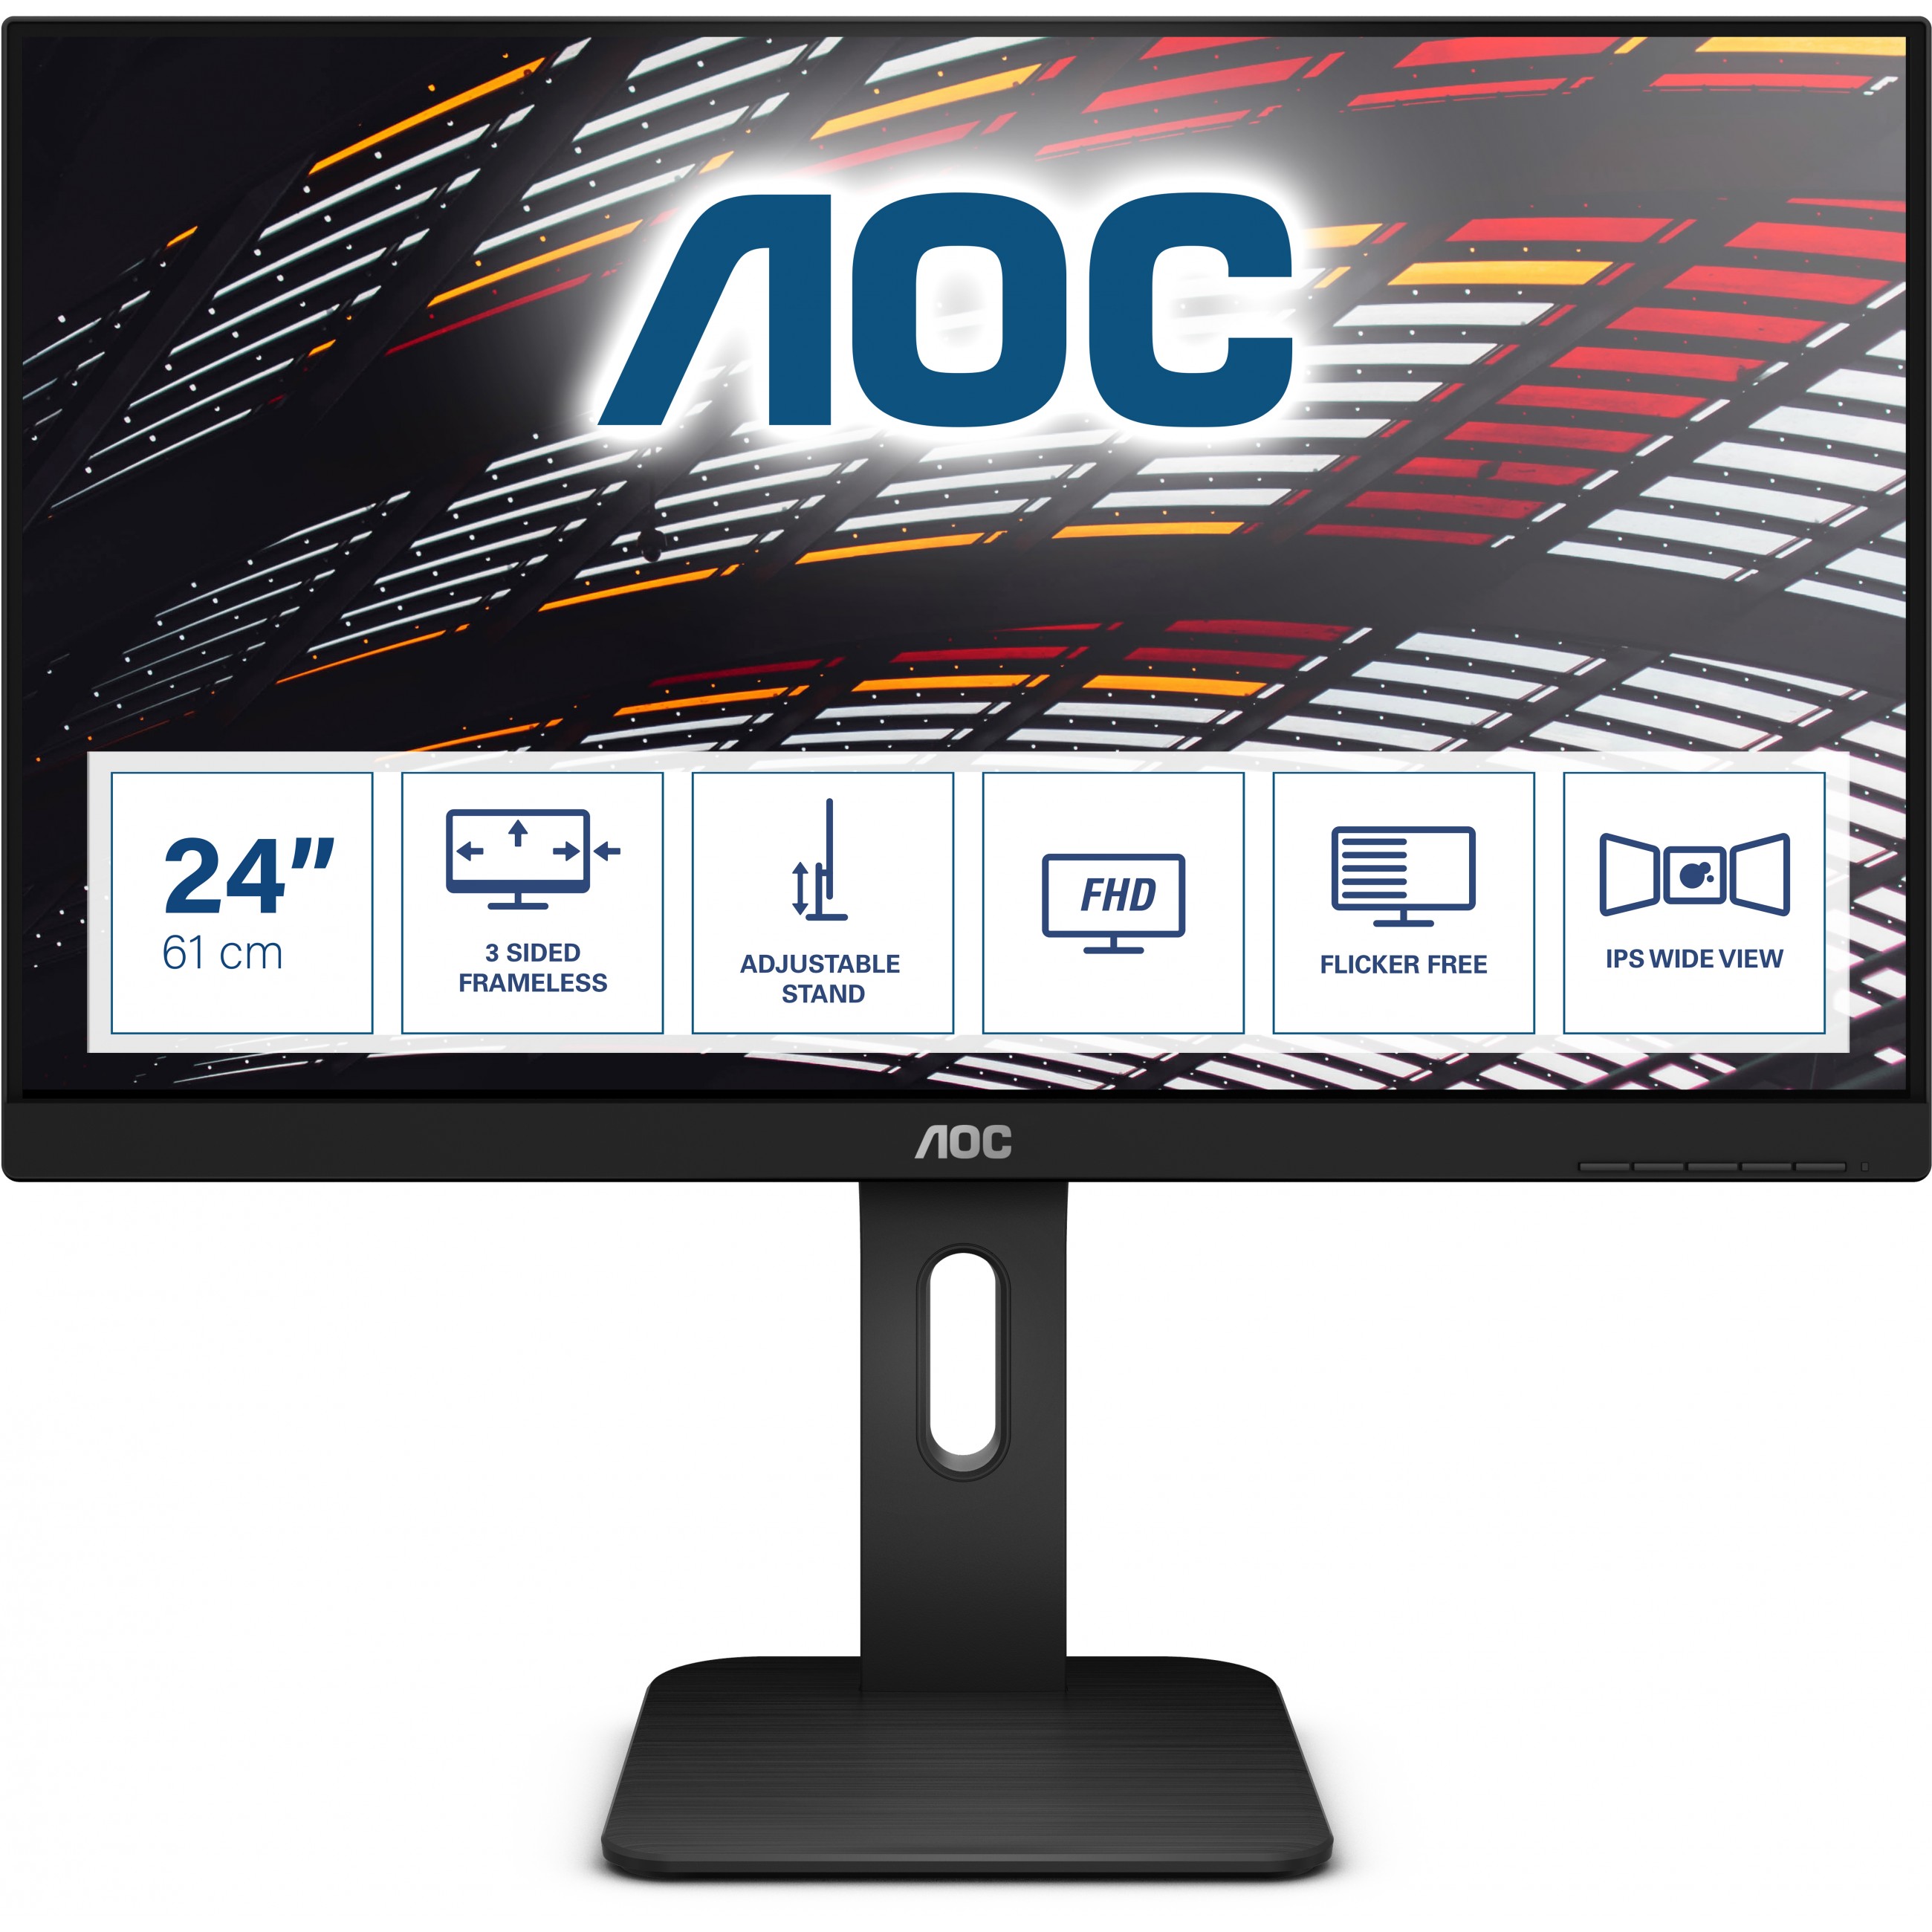 AOC P1 X24P1 computer monitor